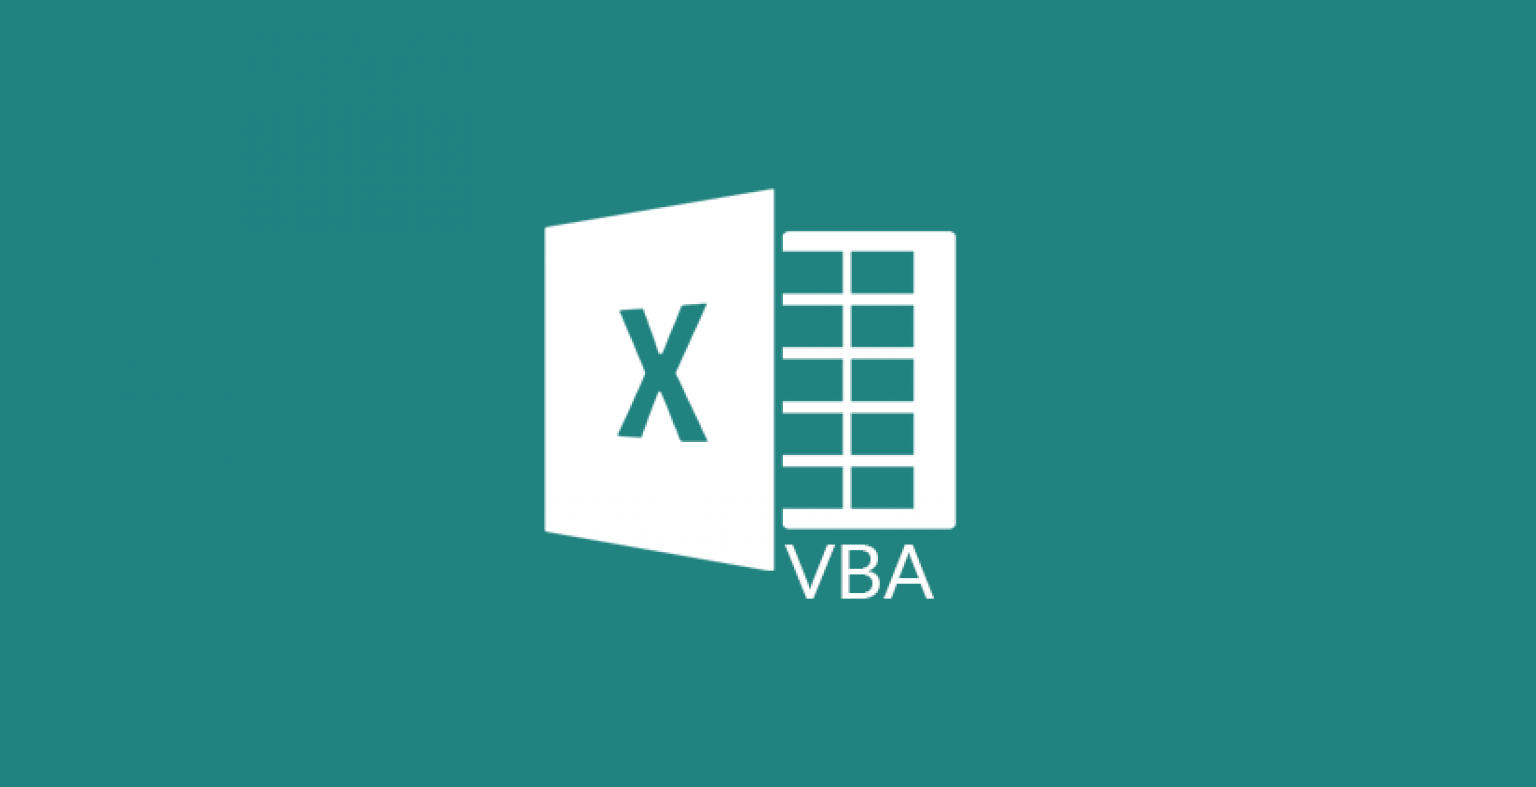 2500 excel vba examples free download pdf